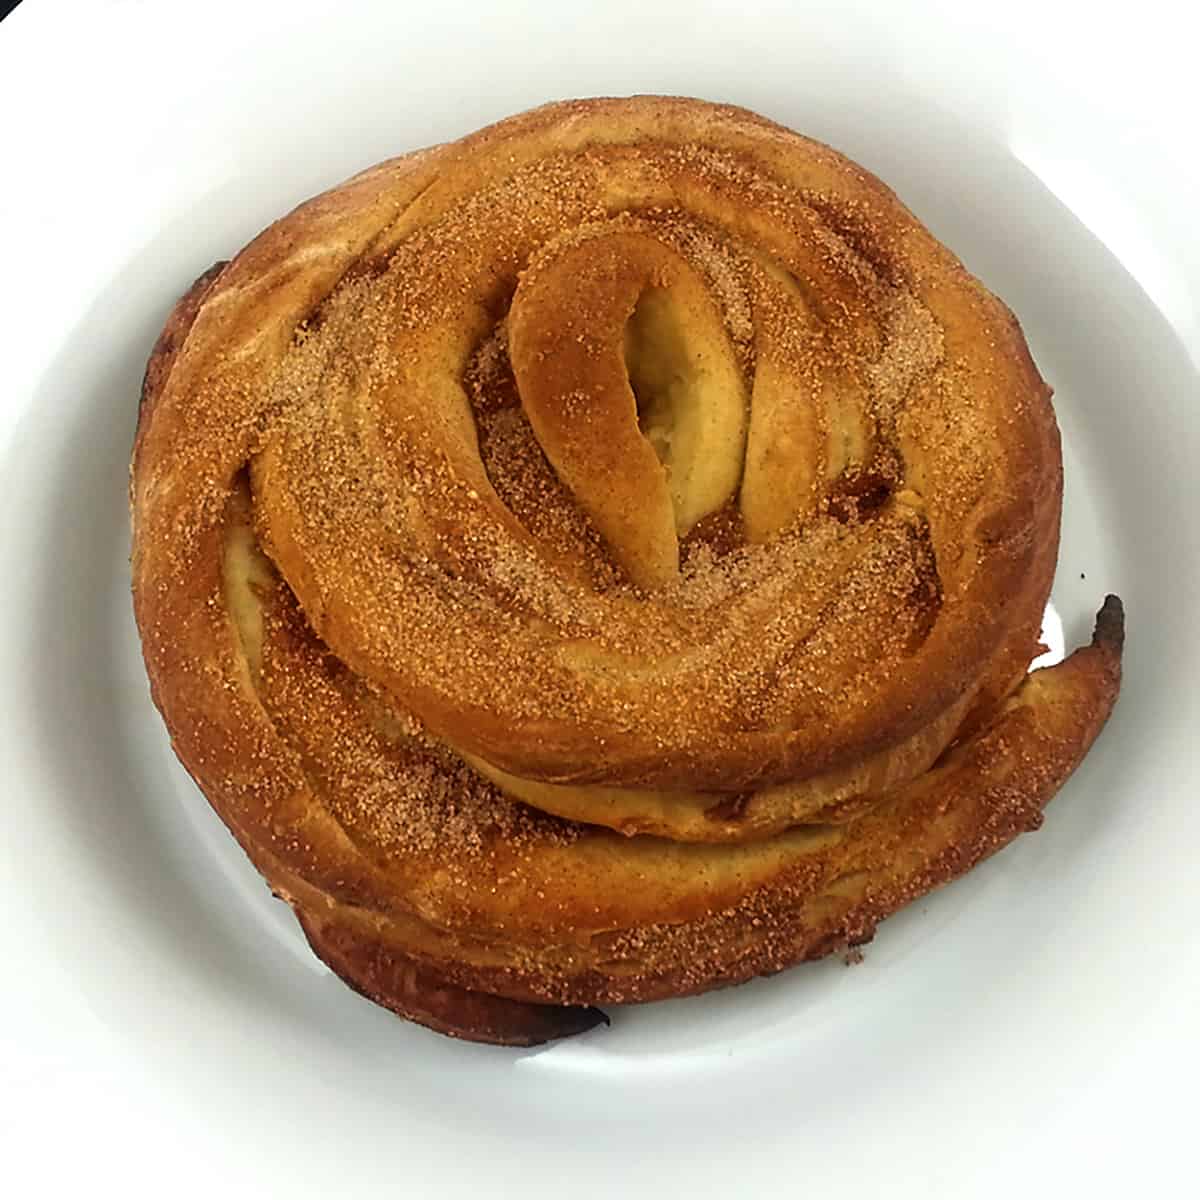 Cinnamon sugar rolls using leftover bread dough. 